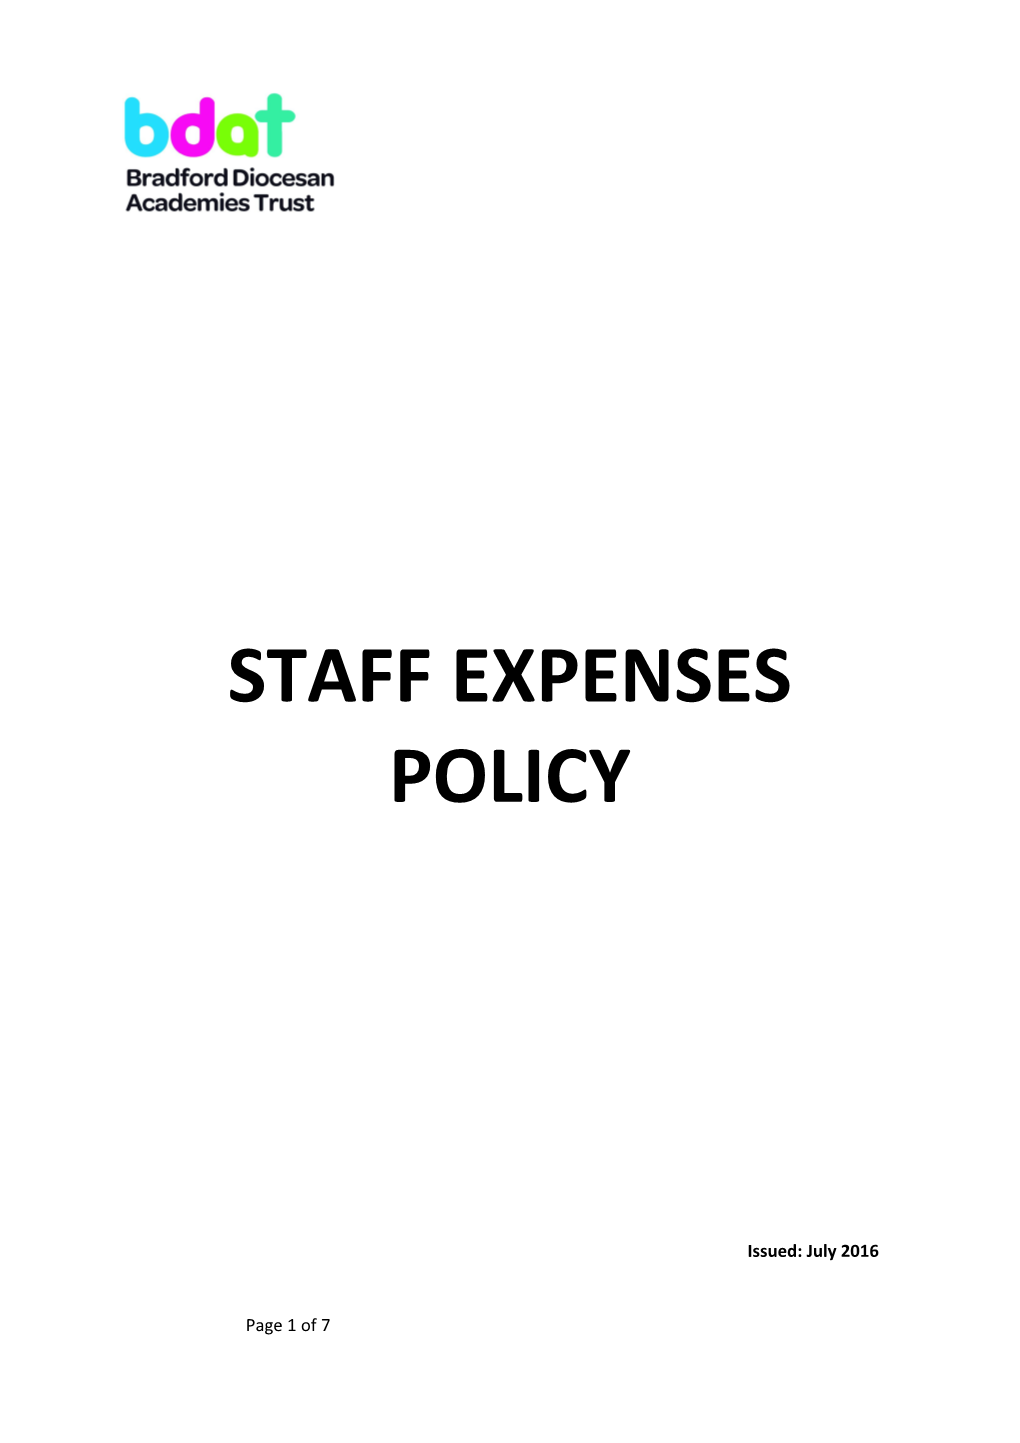 Staff Reimbursement of Expenses Incurred on BDAT Business